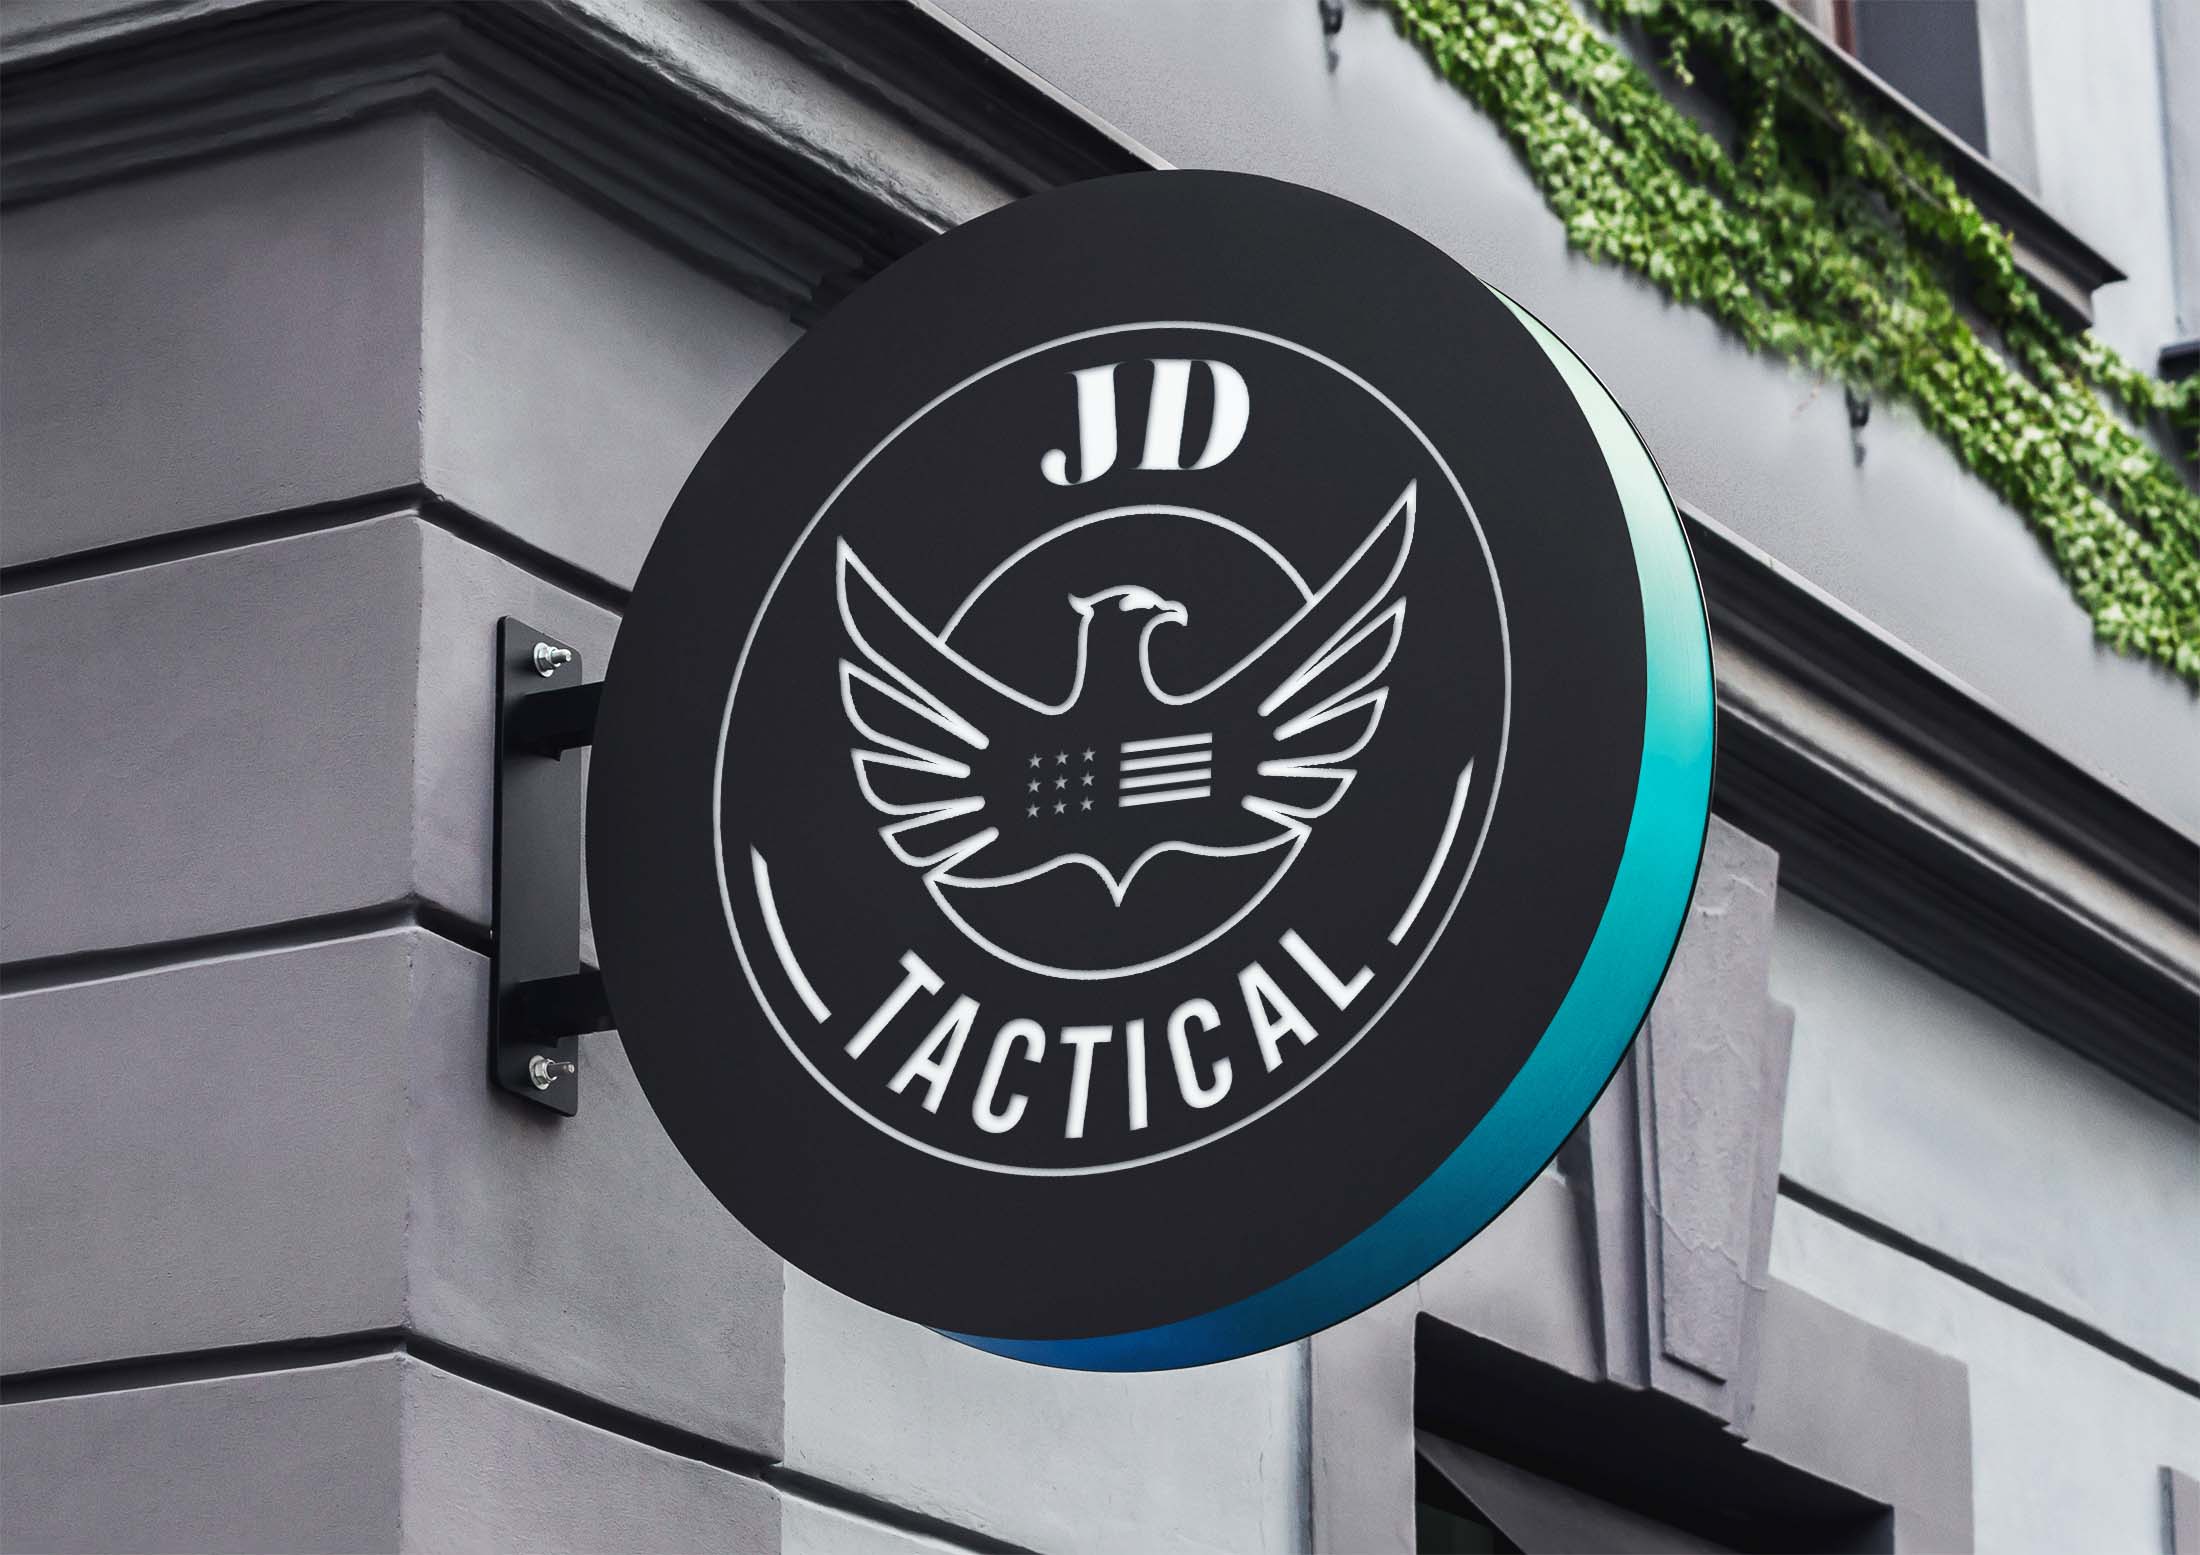 jd tactical street sign